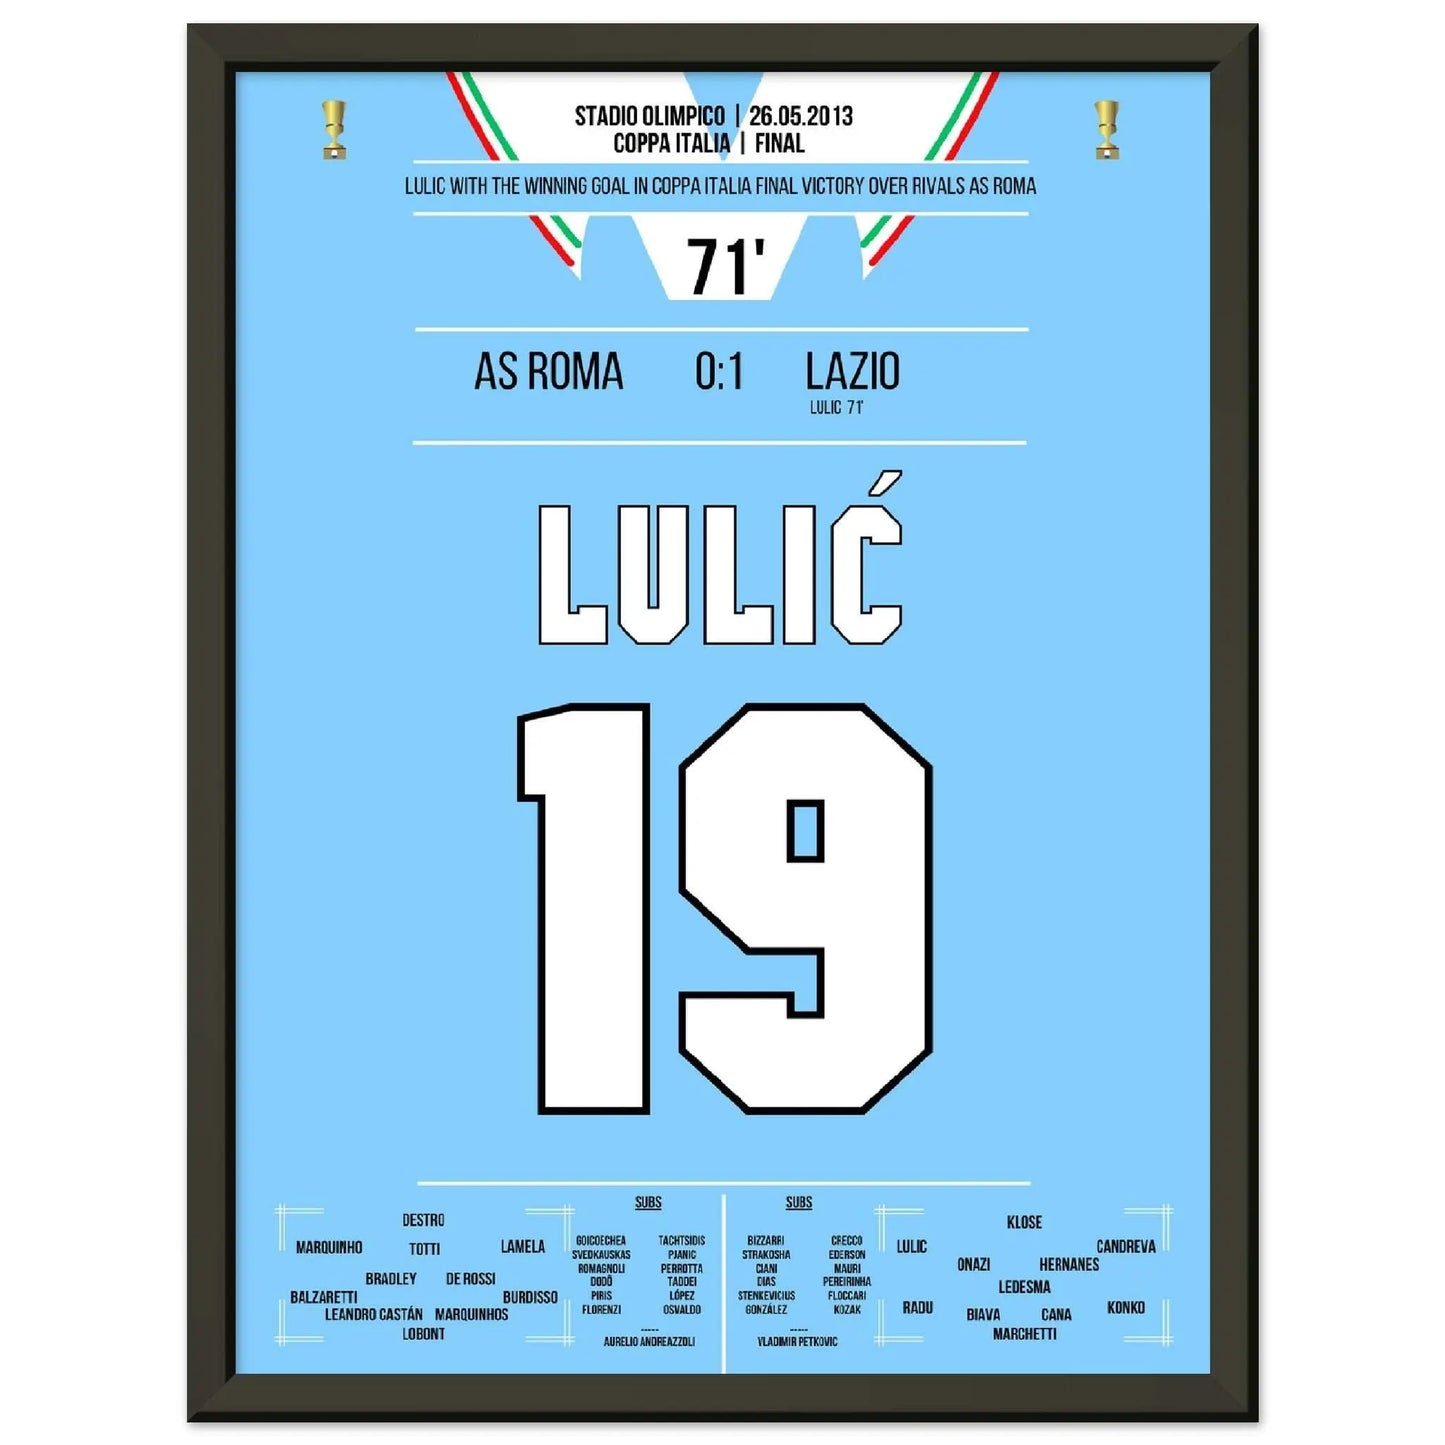 Lulic scores the winning goal in the 2013 Coppa Italia final